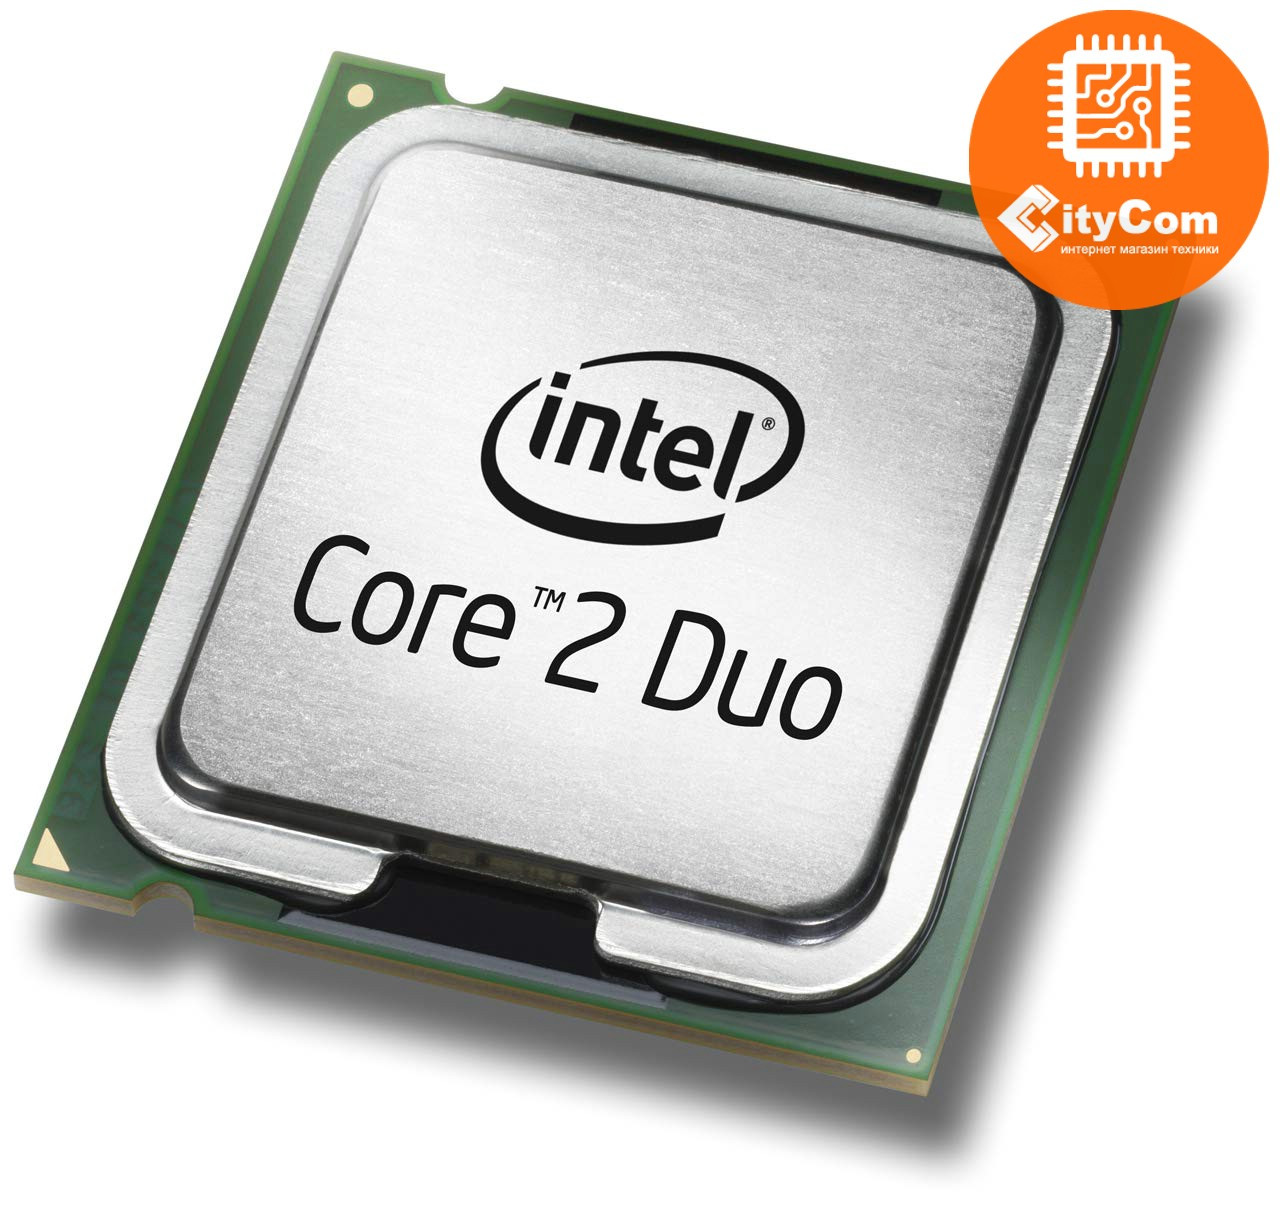 CPU S-775 Intel Core2Duo E7200 2.53 GHz (3MB, 1066 MHz, LGA775) oem Арт.1366